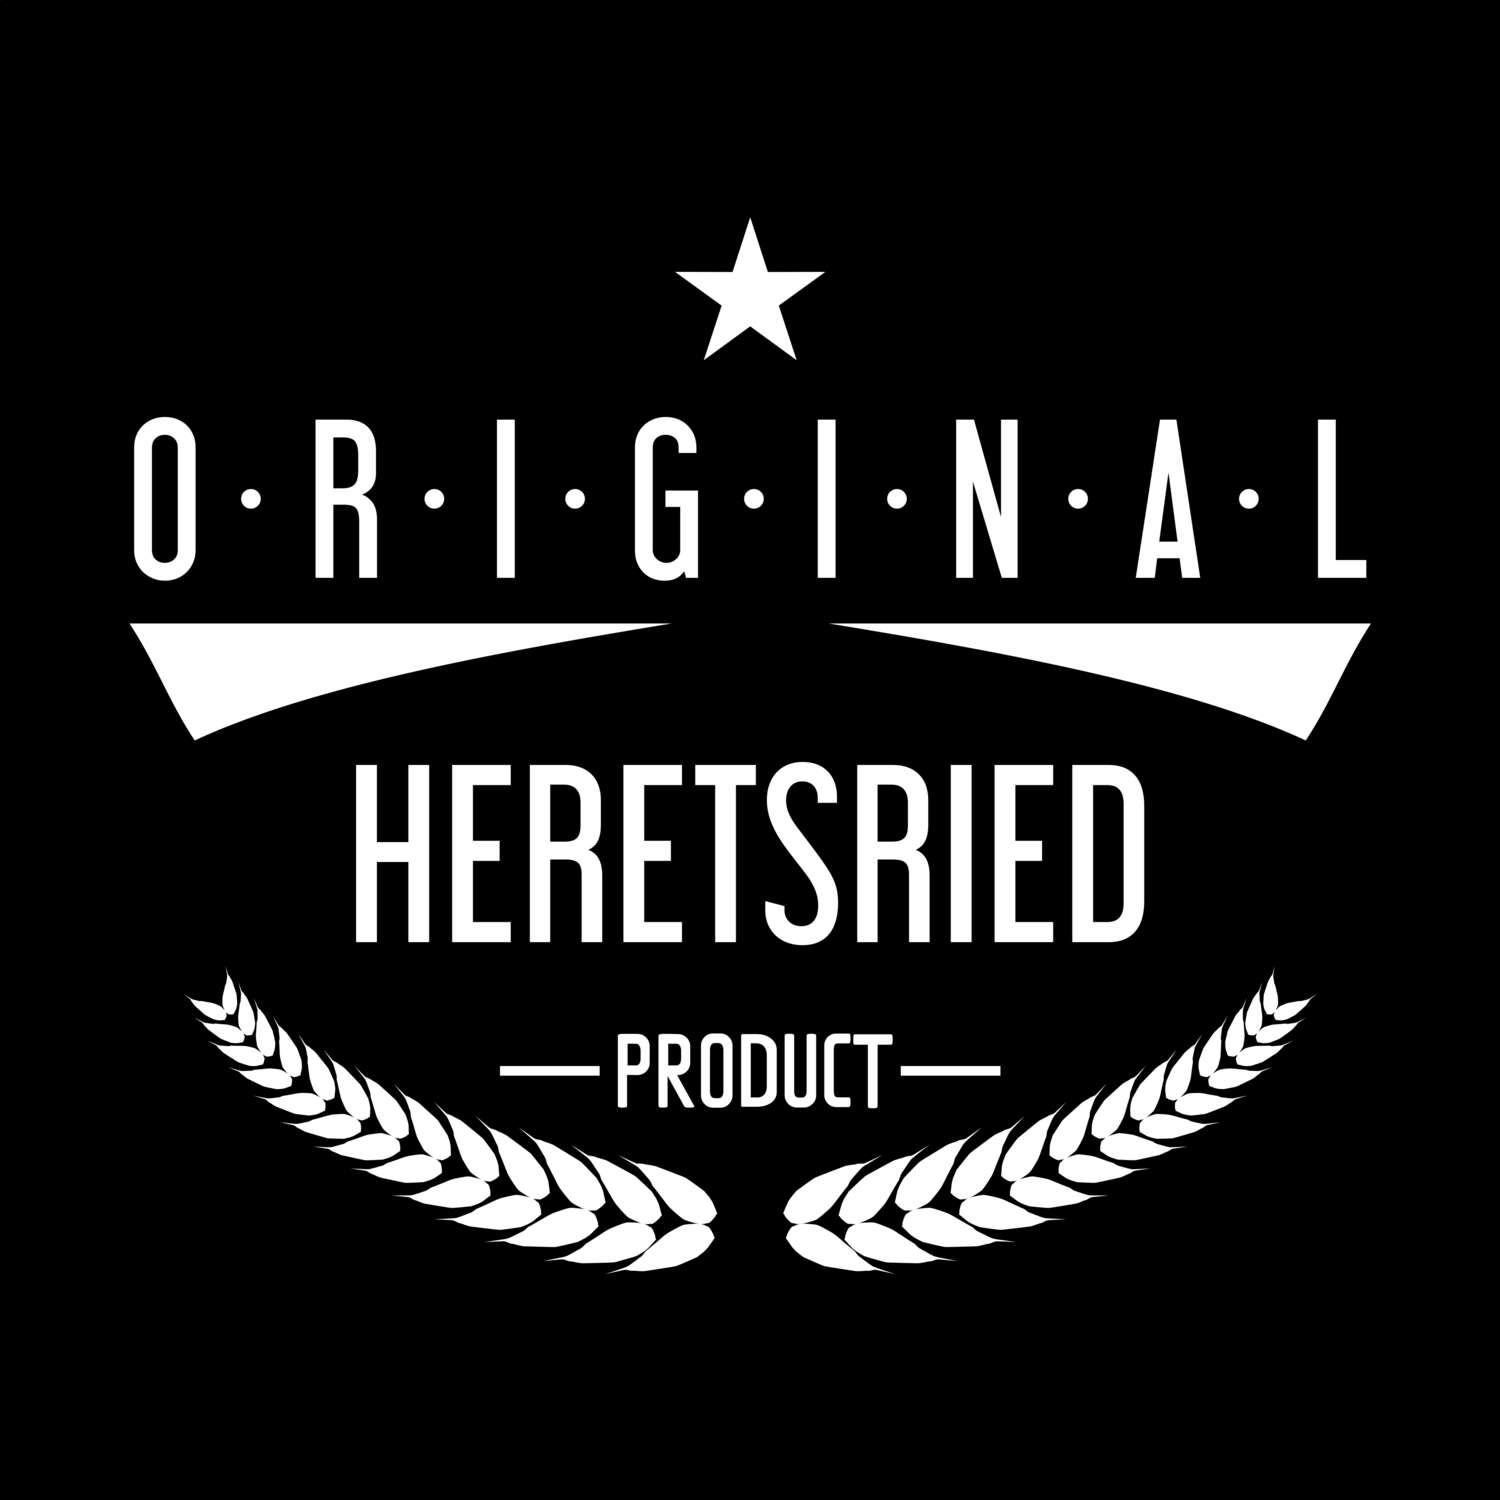 Heretsried T-Shirt »Original Product«